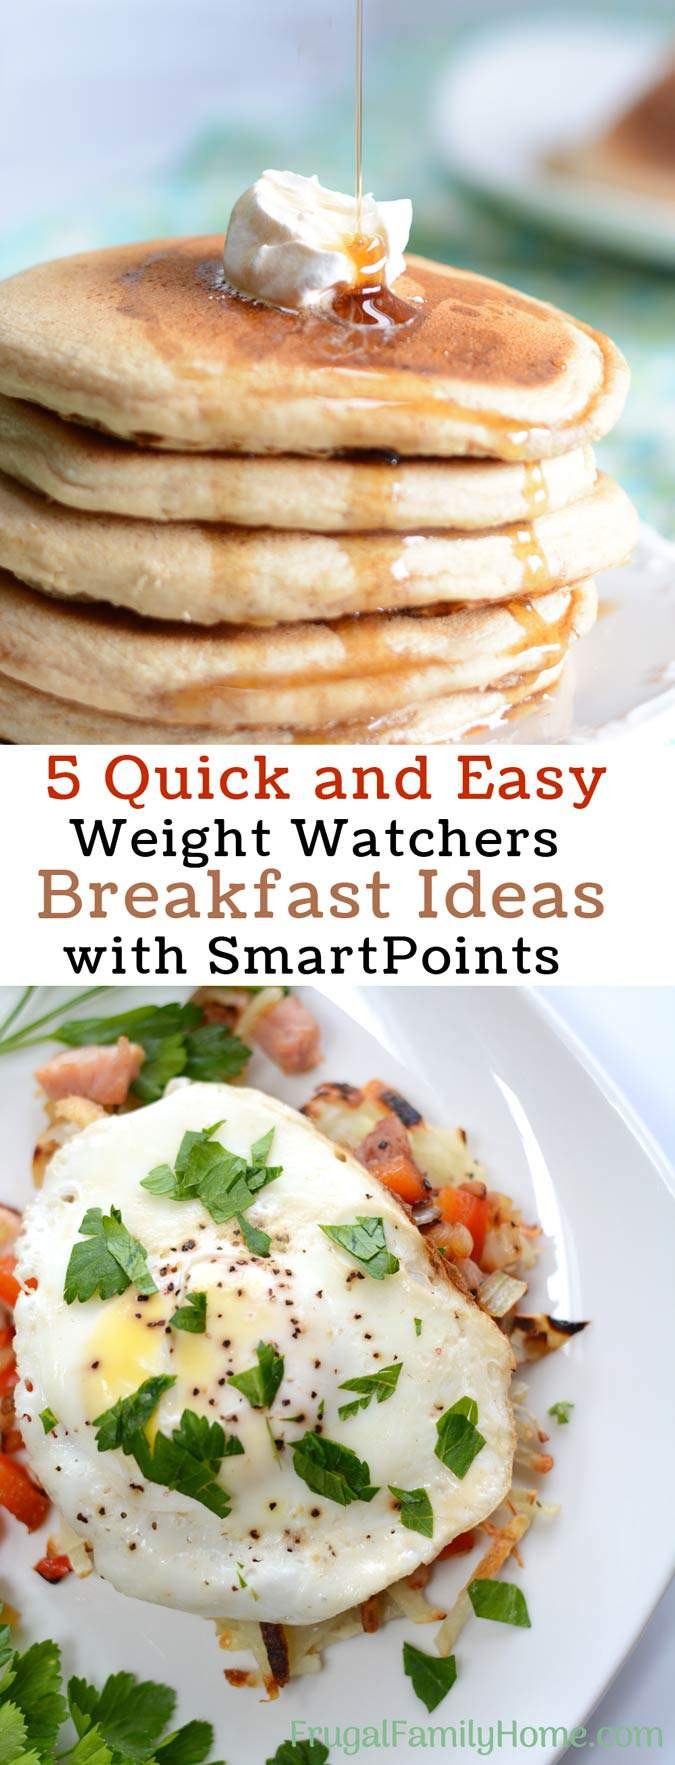 Weight Watchers Recipes Breakfast
 Weight Watchers Breakfast Ideas